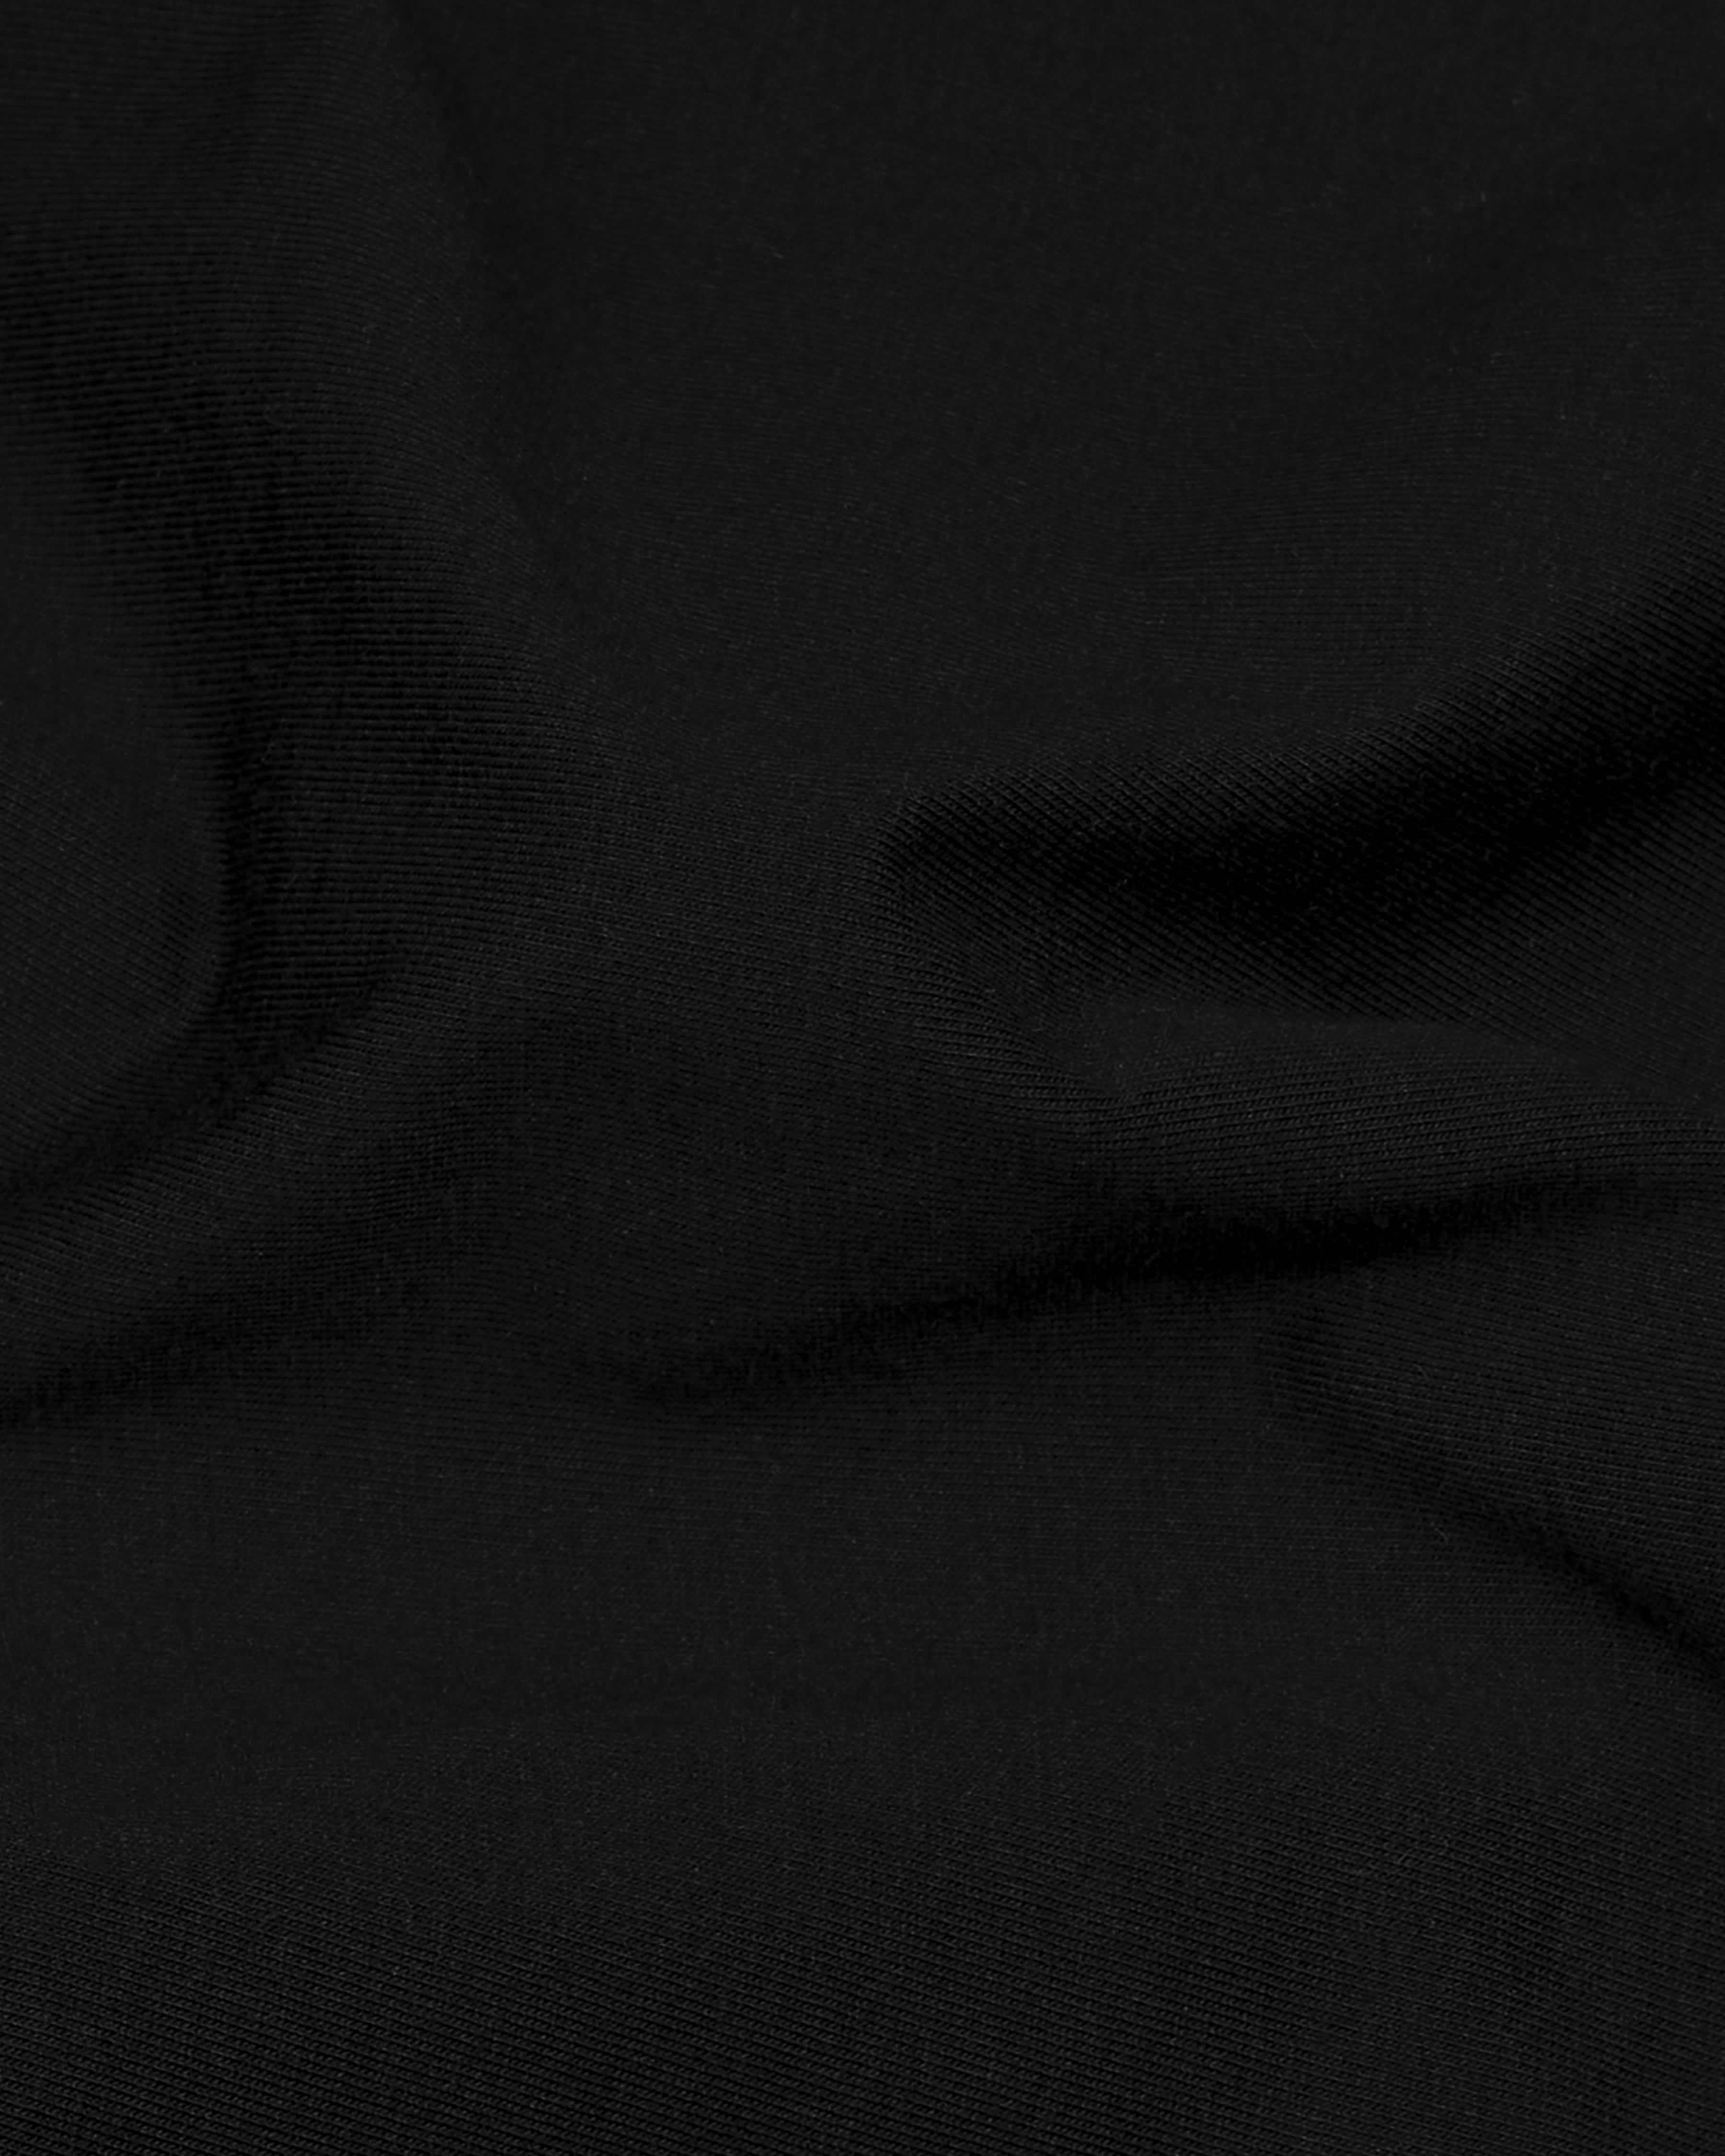 Jade Black with Brown Signature Leather Patch Work Organic Cotton Signature T-shirt TS045-W03-S, TS045-W03-M, TS045-W03-L, TS045-W03-XL, TS045-W03-XXL